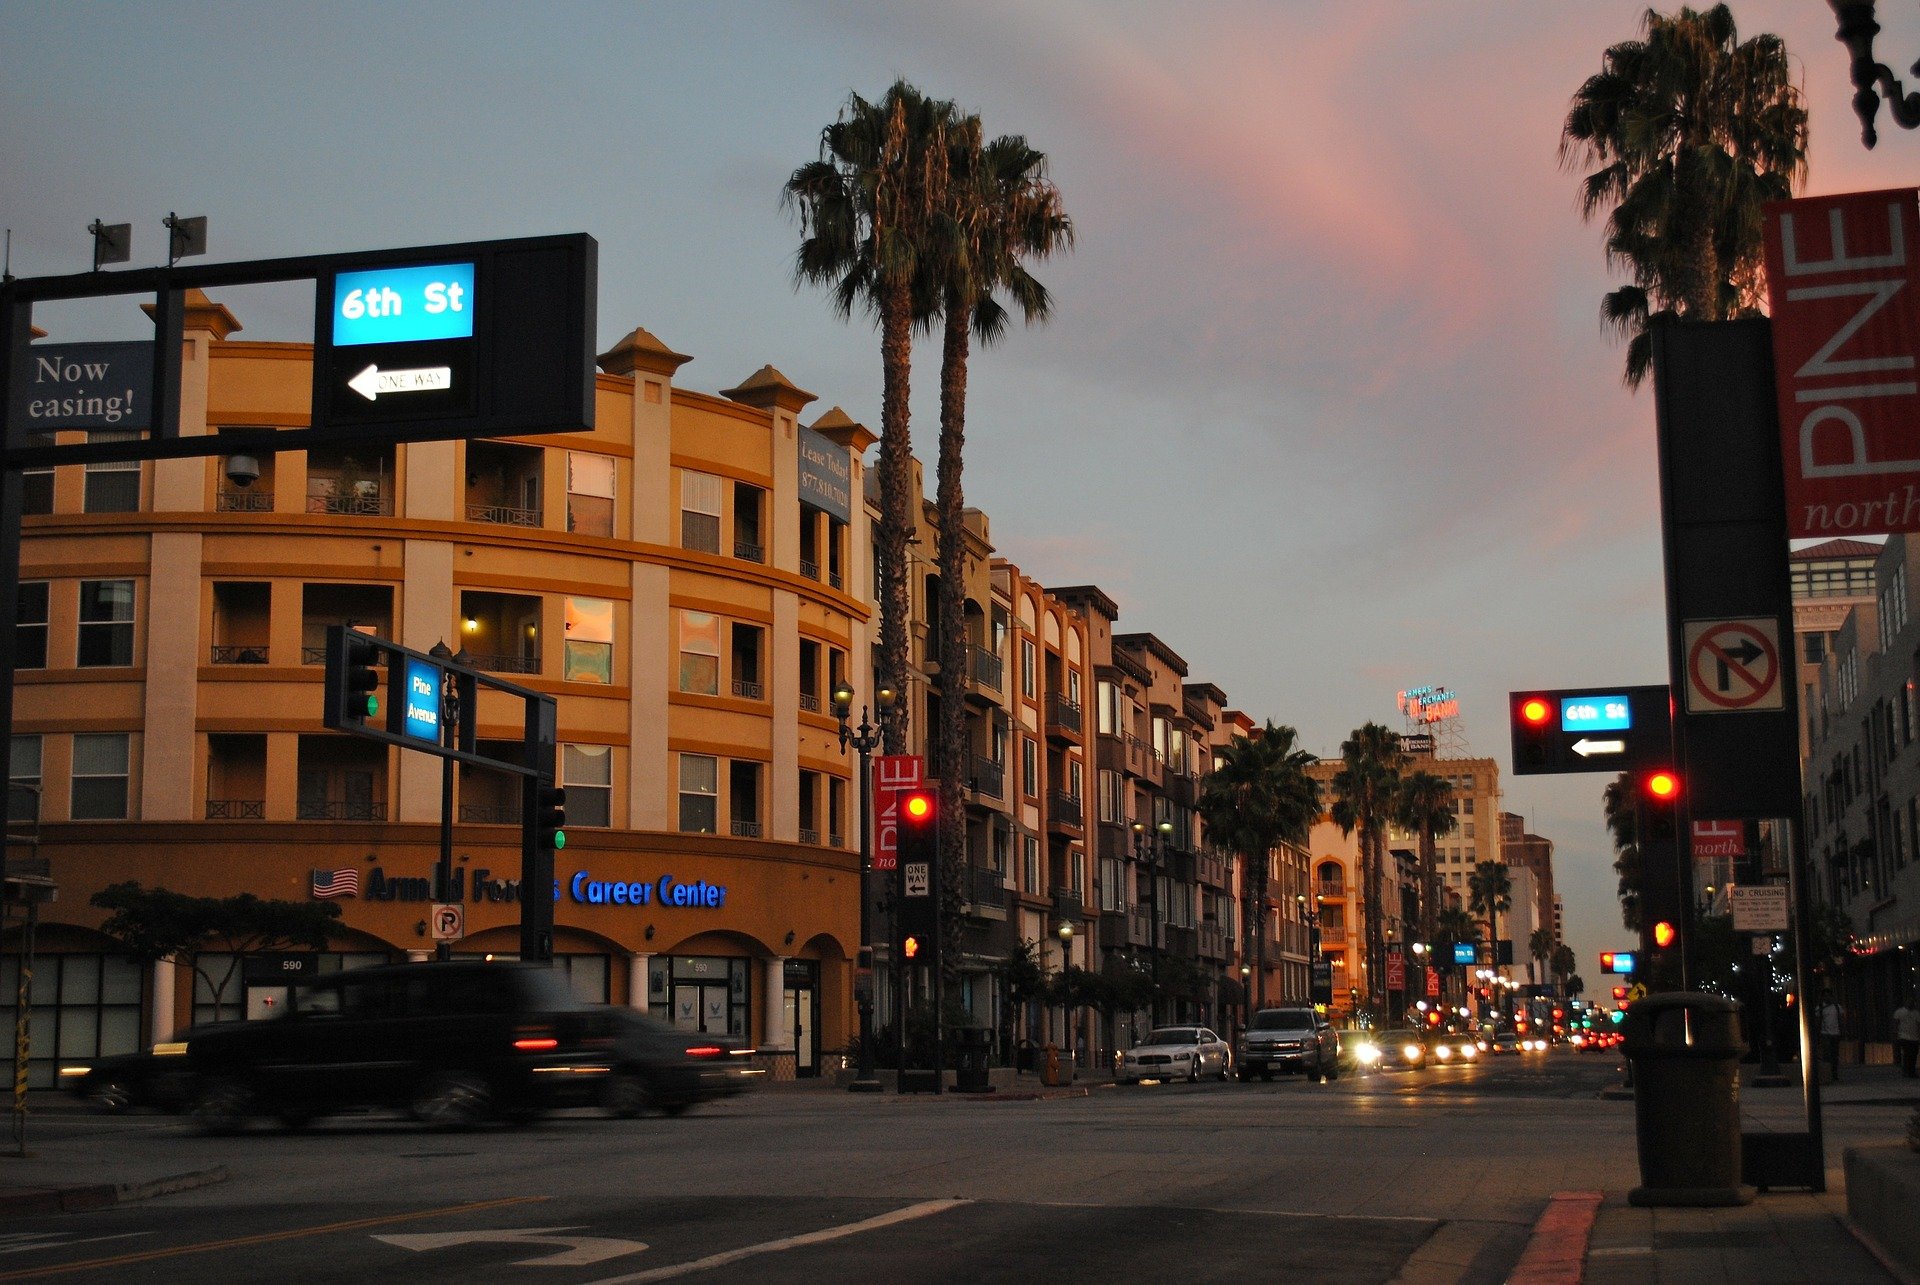 Downtown Long Beach